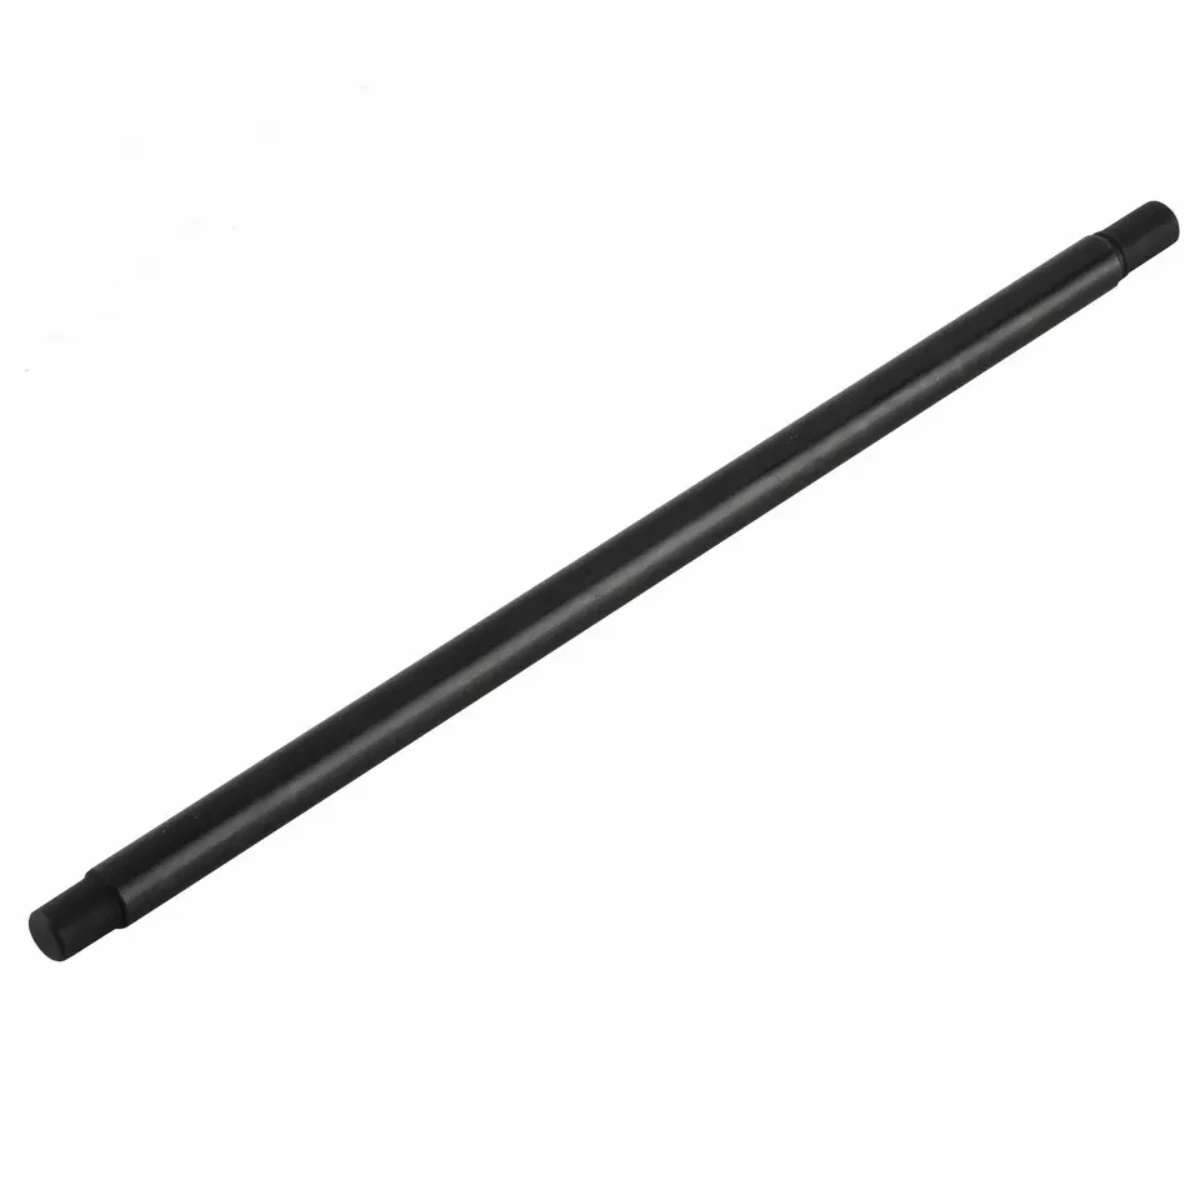 Custom black iron rod black shaft QPQ blackened gas spring support rod piston rod